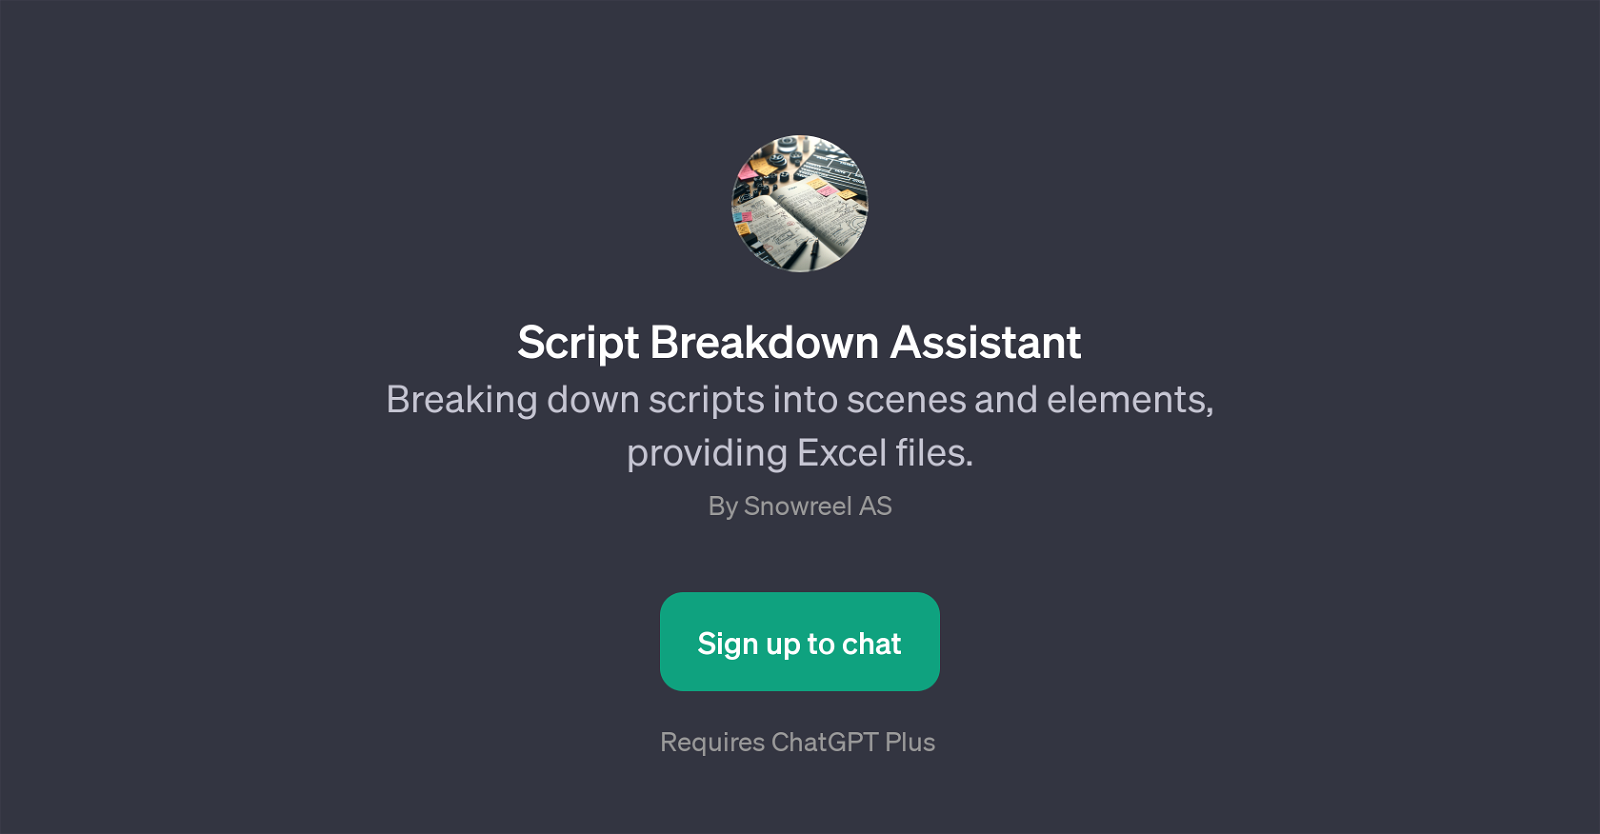 Script Breakdown Assistant website